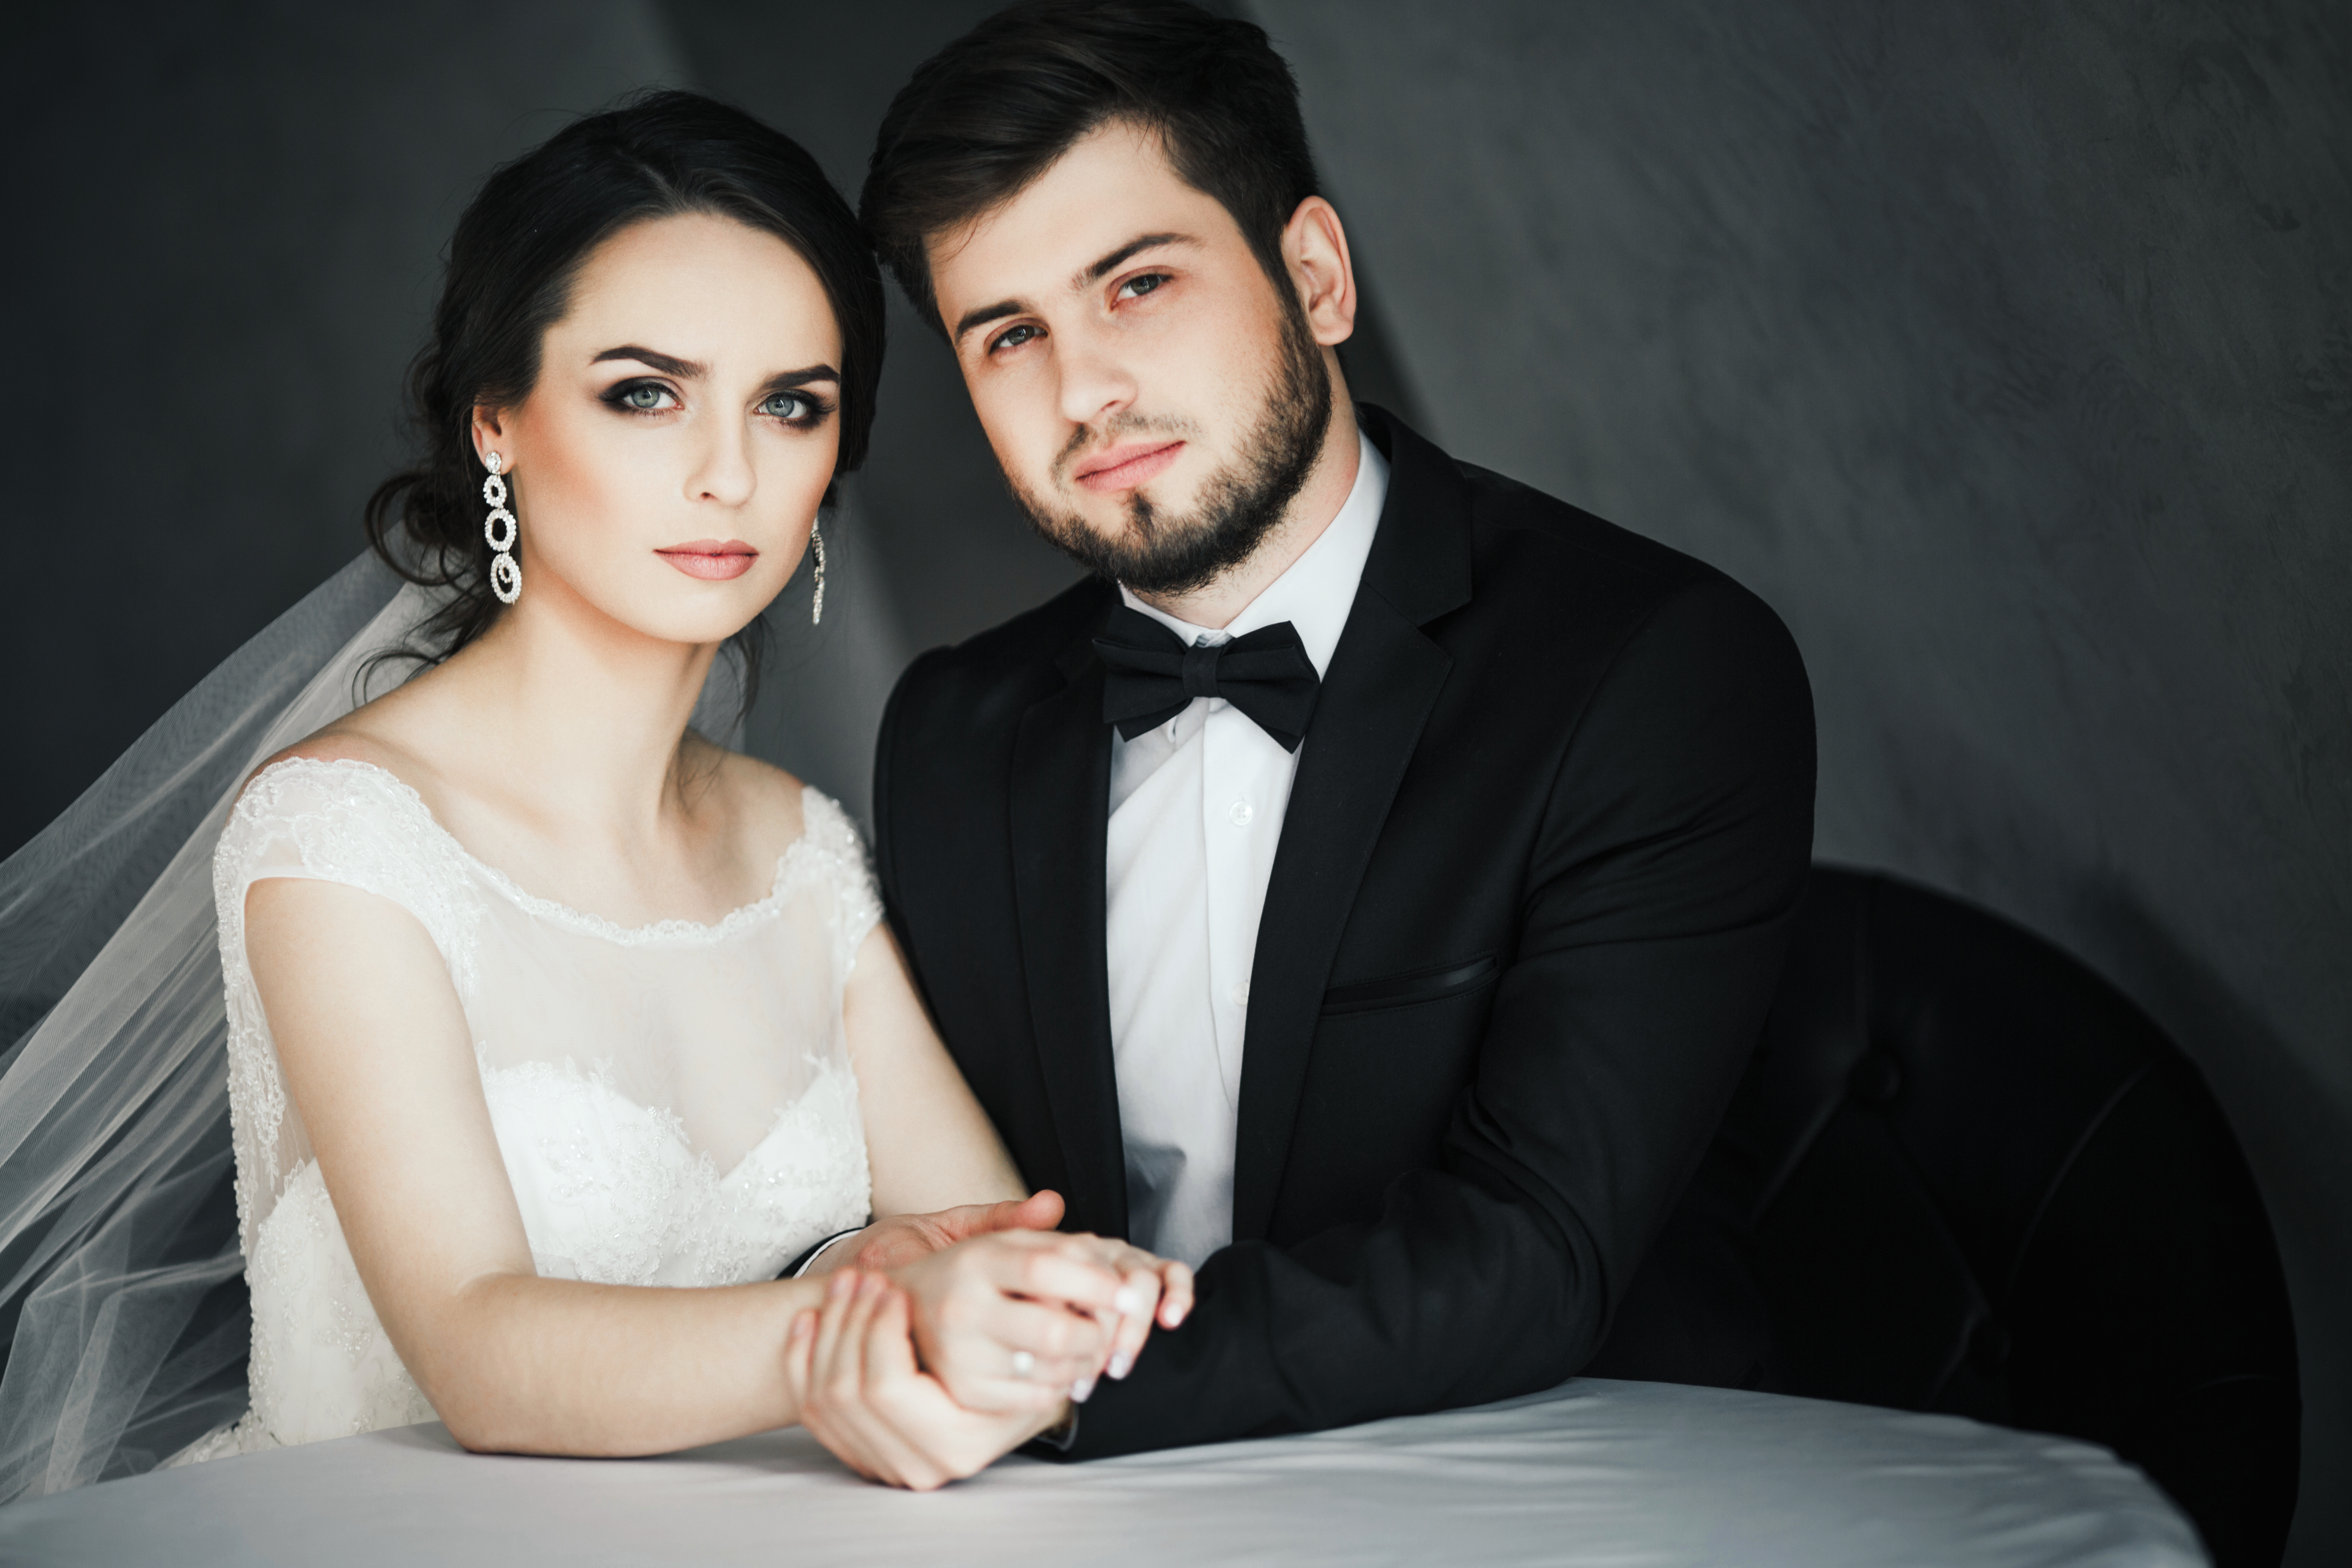 Hochzeit - Shooting - Ihr mobiler Fotograf in Ihrer Umgebung - 
Malik Özipek - 0175 / 38 55 039